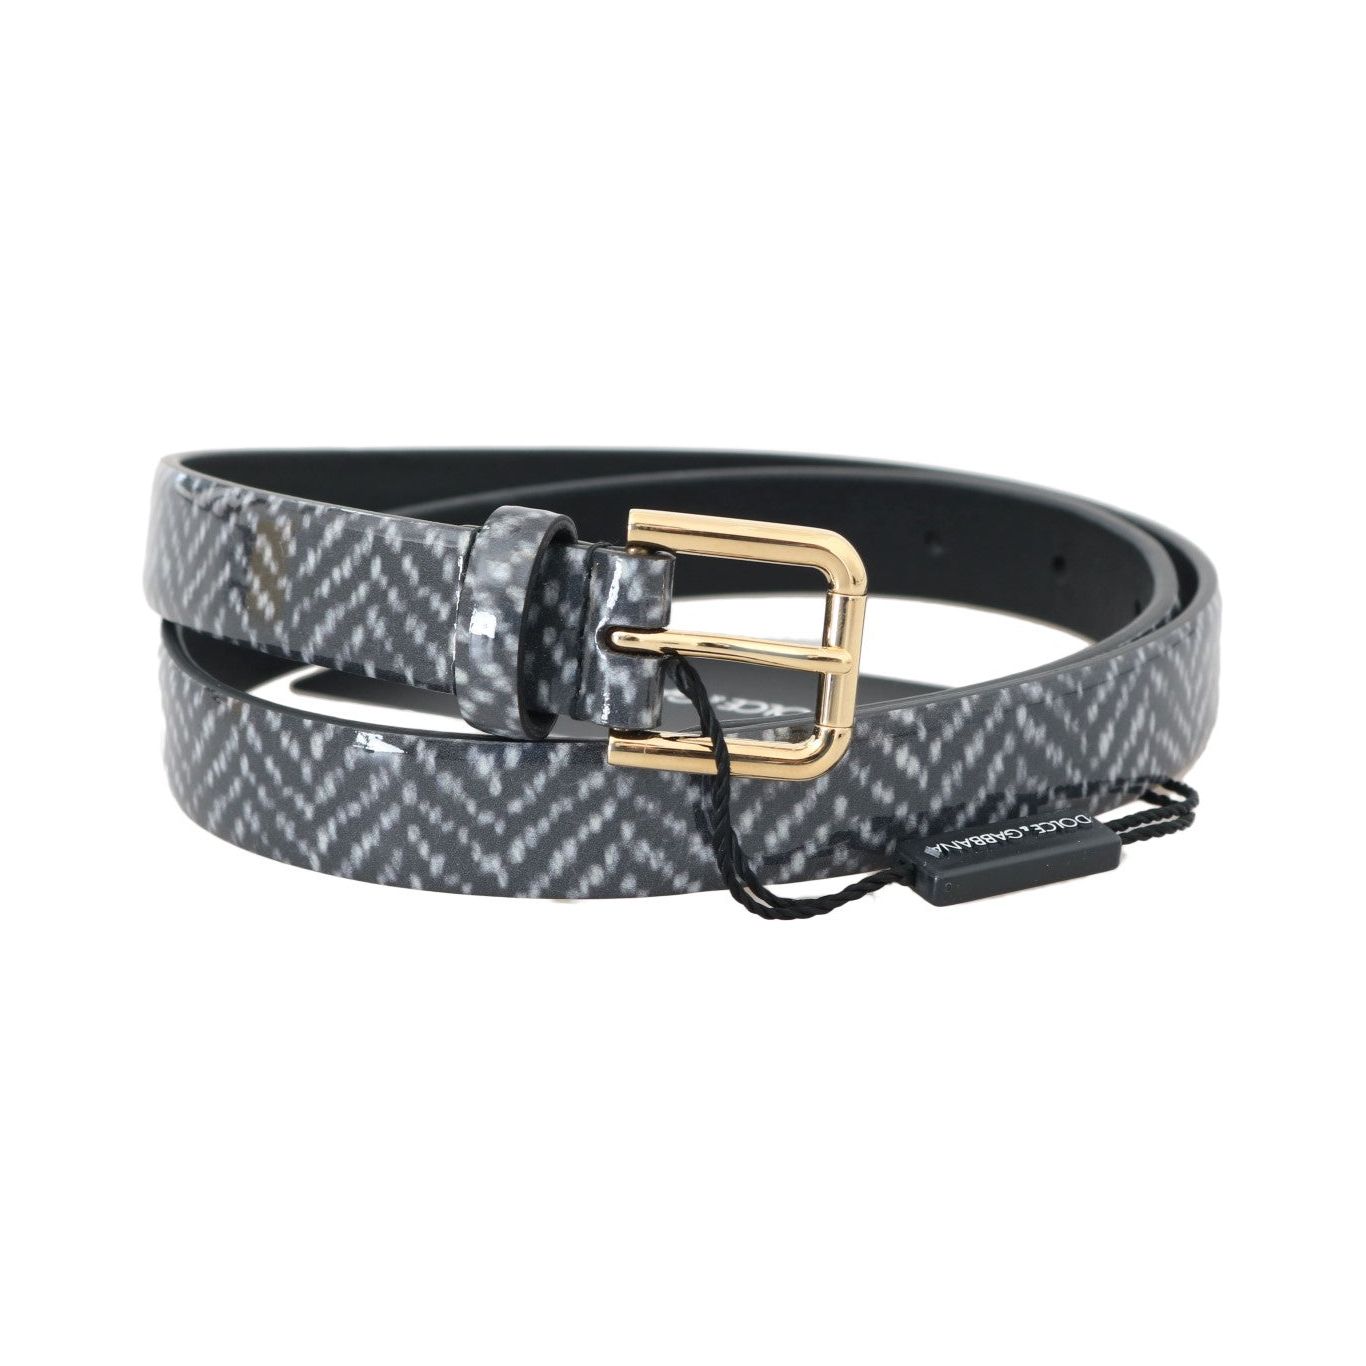 Dolce & Gabbana Elegant Chevron Leather Waist Belt black-white-chevron-pattern-leather-belt Belt 496158-black-white-chevron-pattern-leather-belt-1.jpg